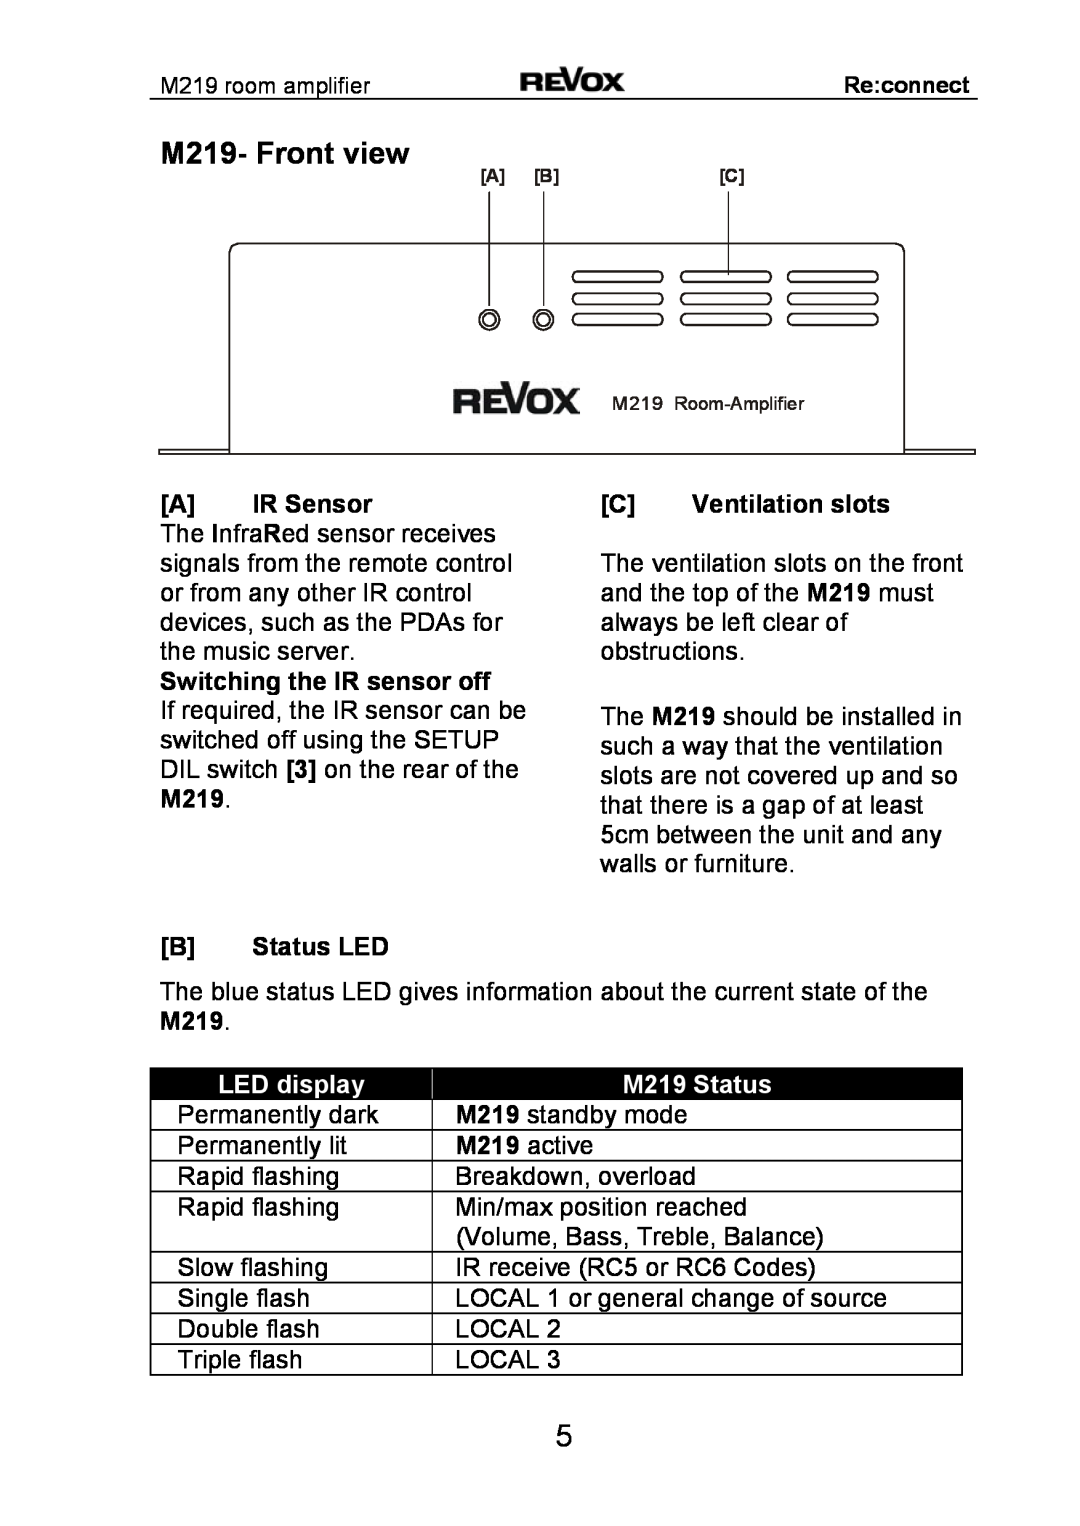 Revox M 219 manual M219- Front view, AIR Sensor, Switching the IR sensor off, BStatus LED, CVentilation slots 